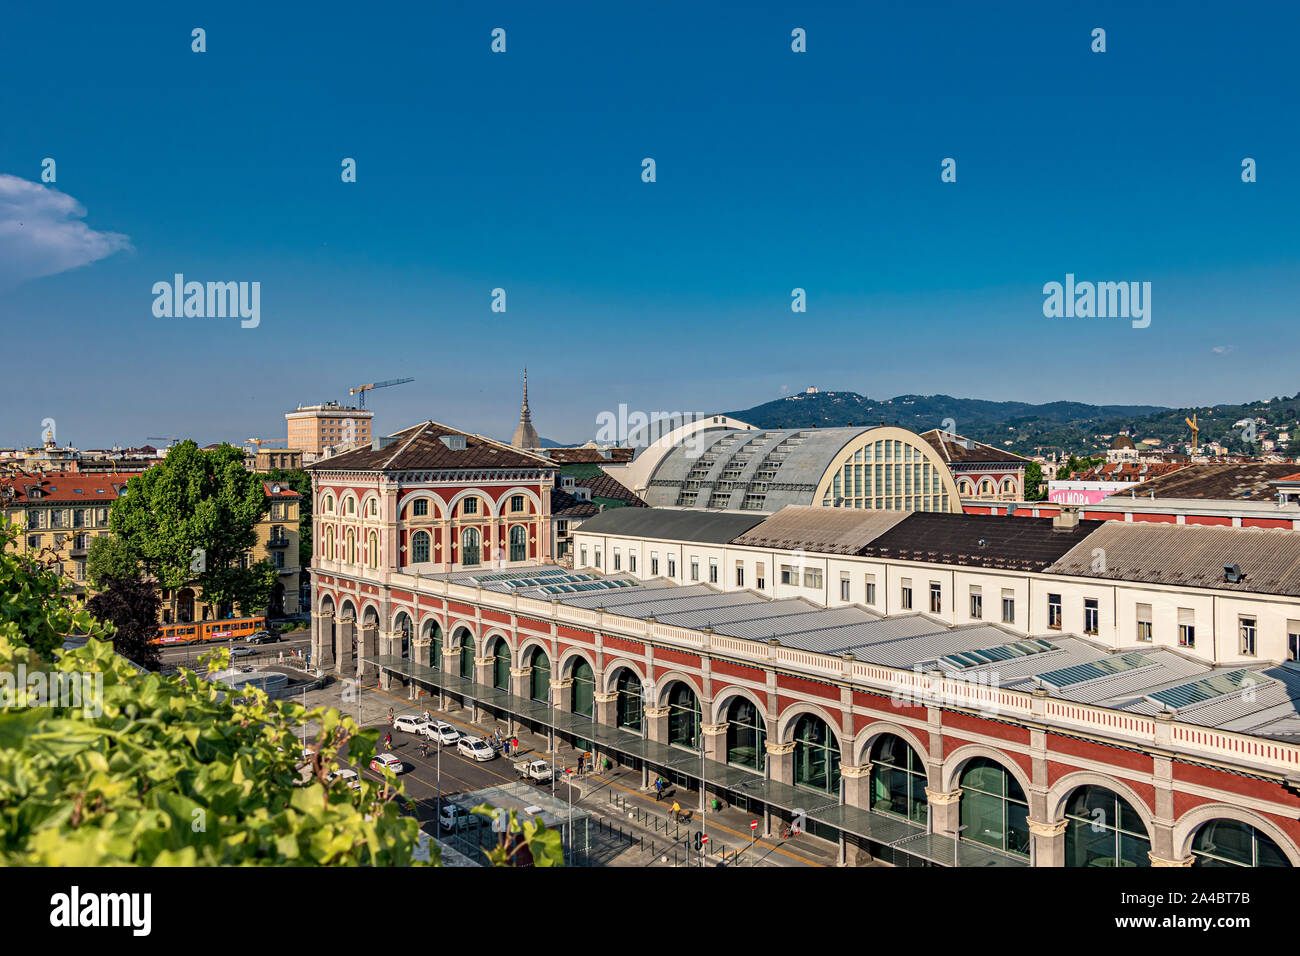 La belle façade de la gare de Torino Porta Nuova, de la gare principale de Turin et la troisième station la plus achalandée en Italie Banque D'Images